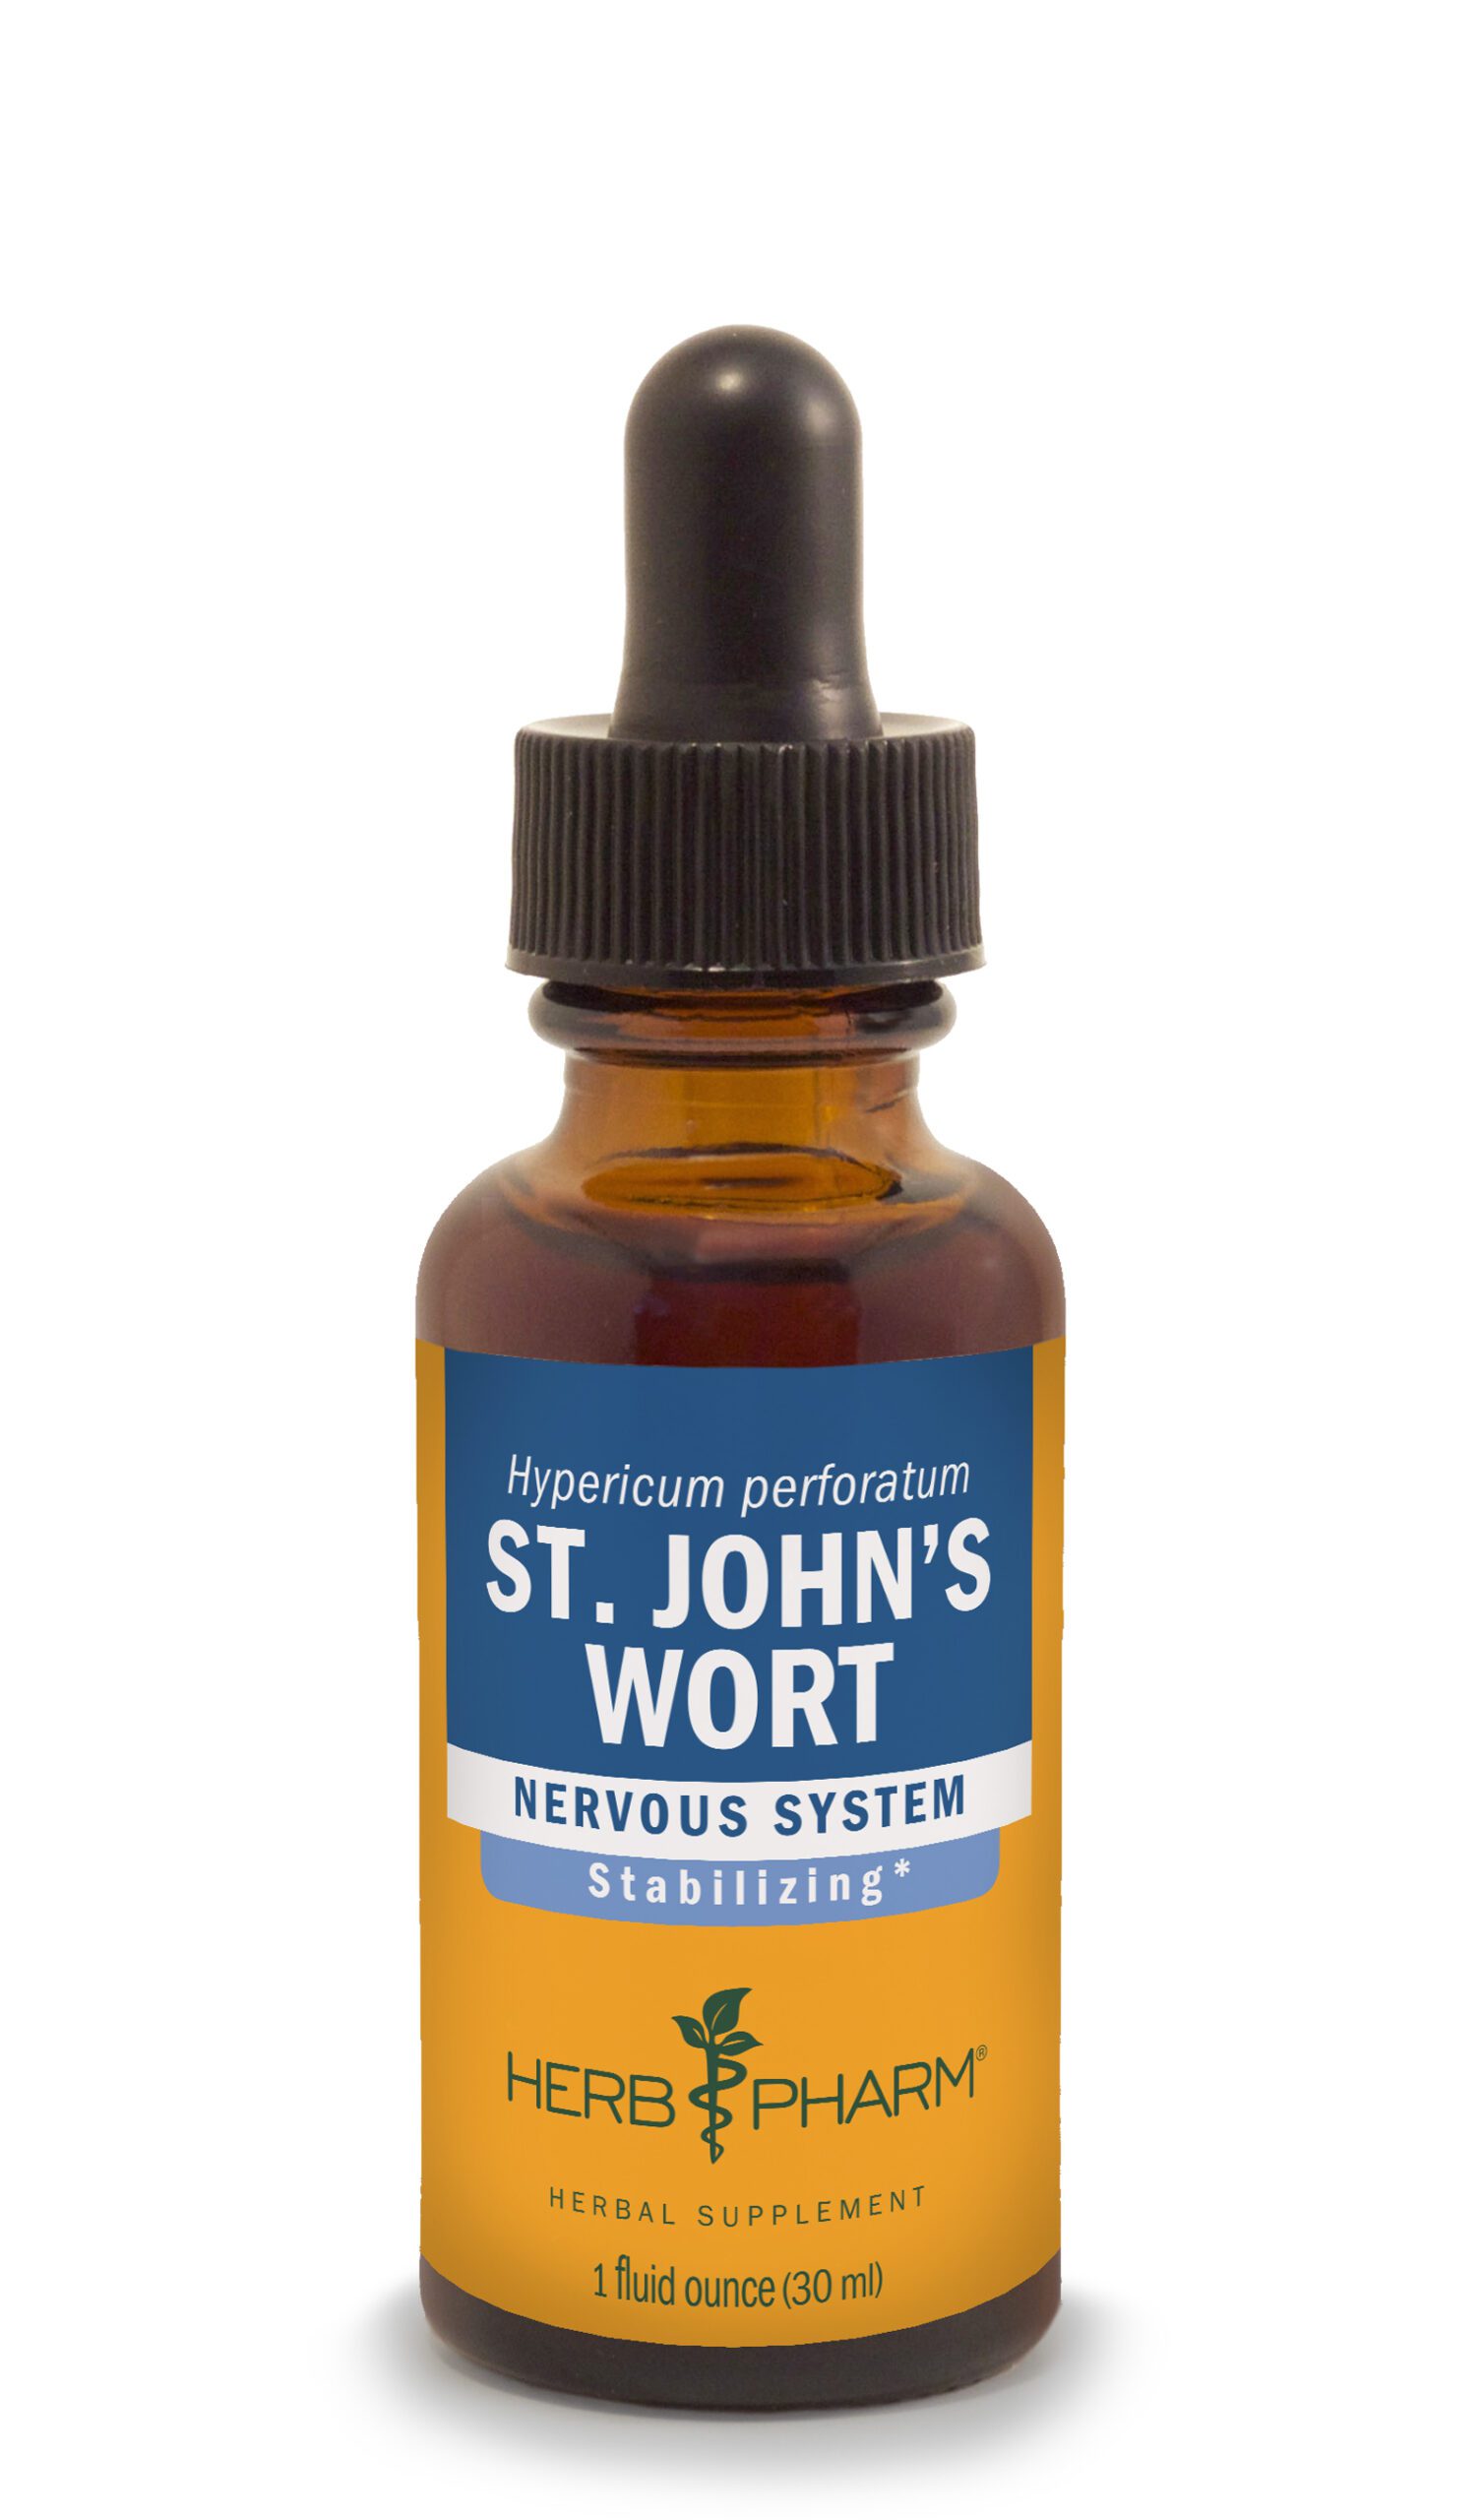 Product Listing Image for Herb Pharm St John's Wort Tincture 1oz